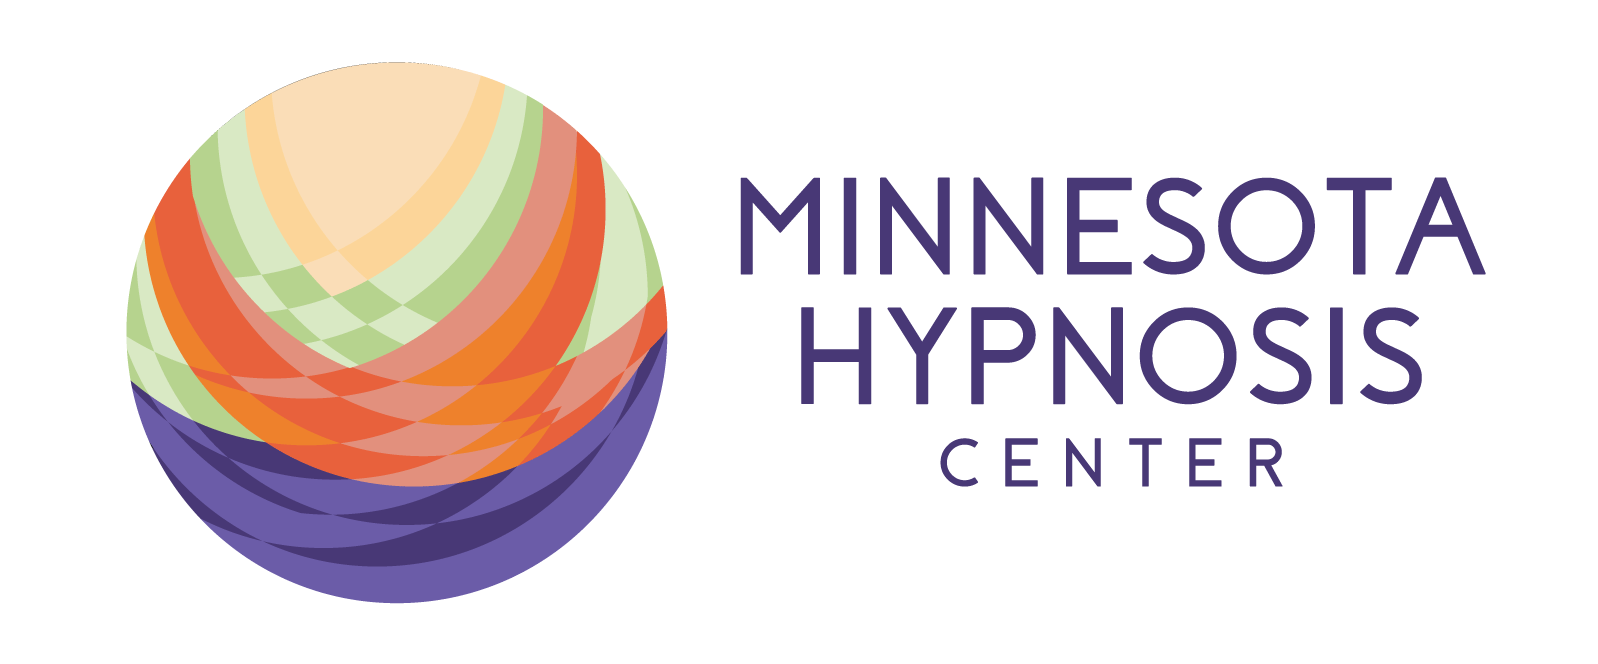 Minnesota Hypnosis